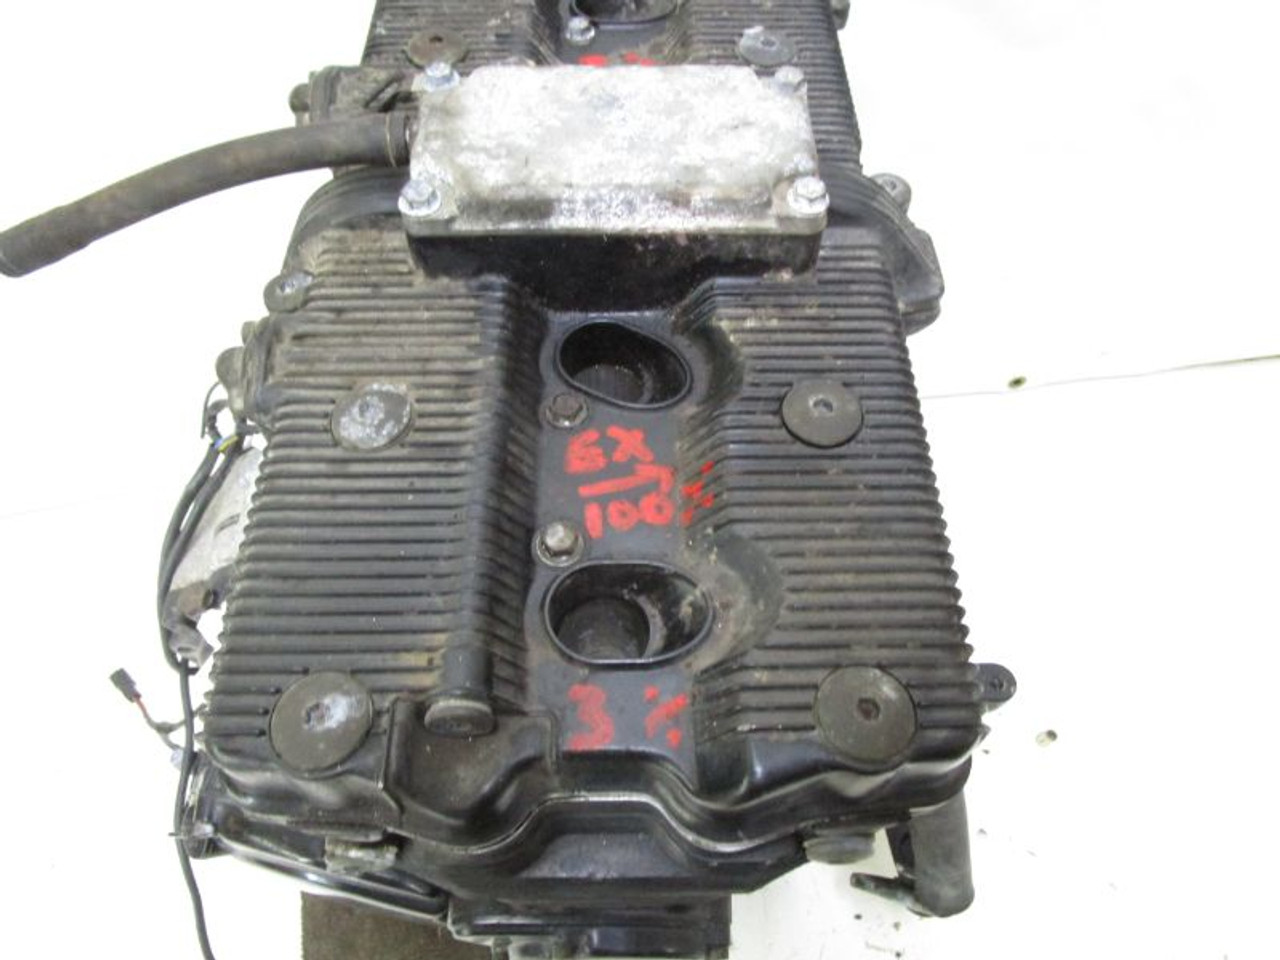 1996 Suzuki GSX 600 F Katana used Motor Engine *Parts or Repair Only*  21,900 mi